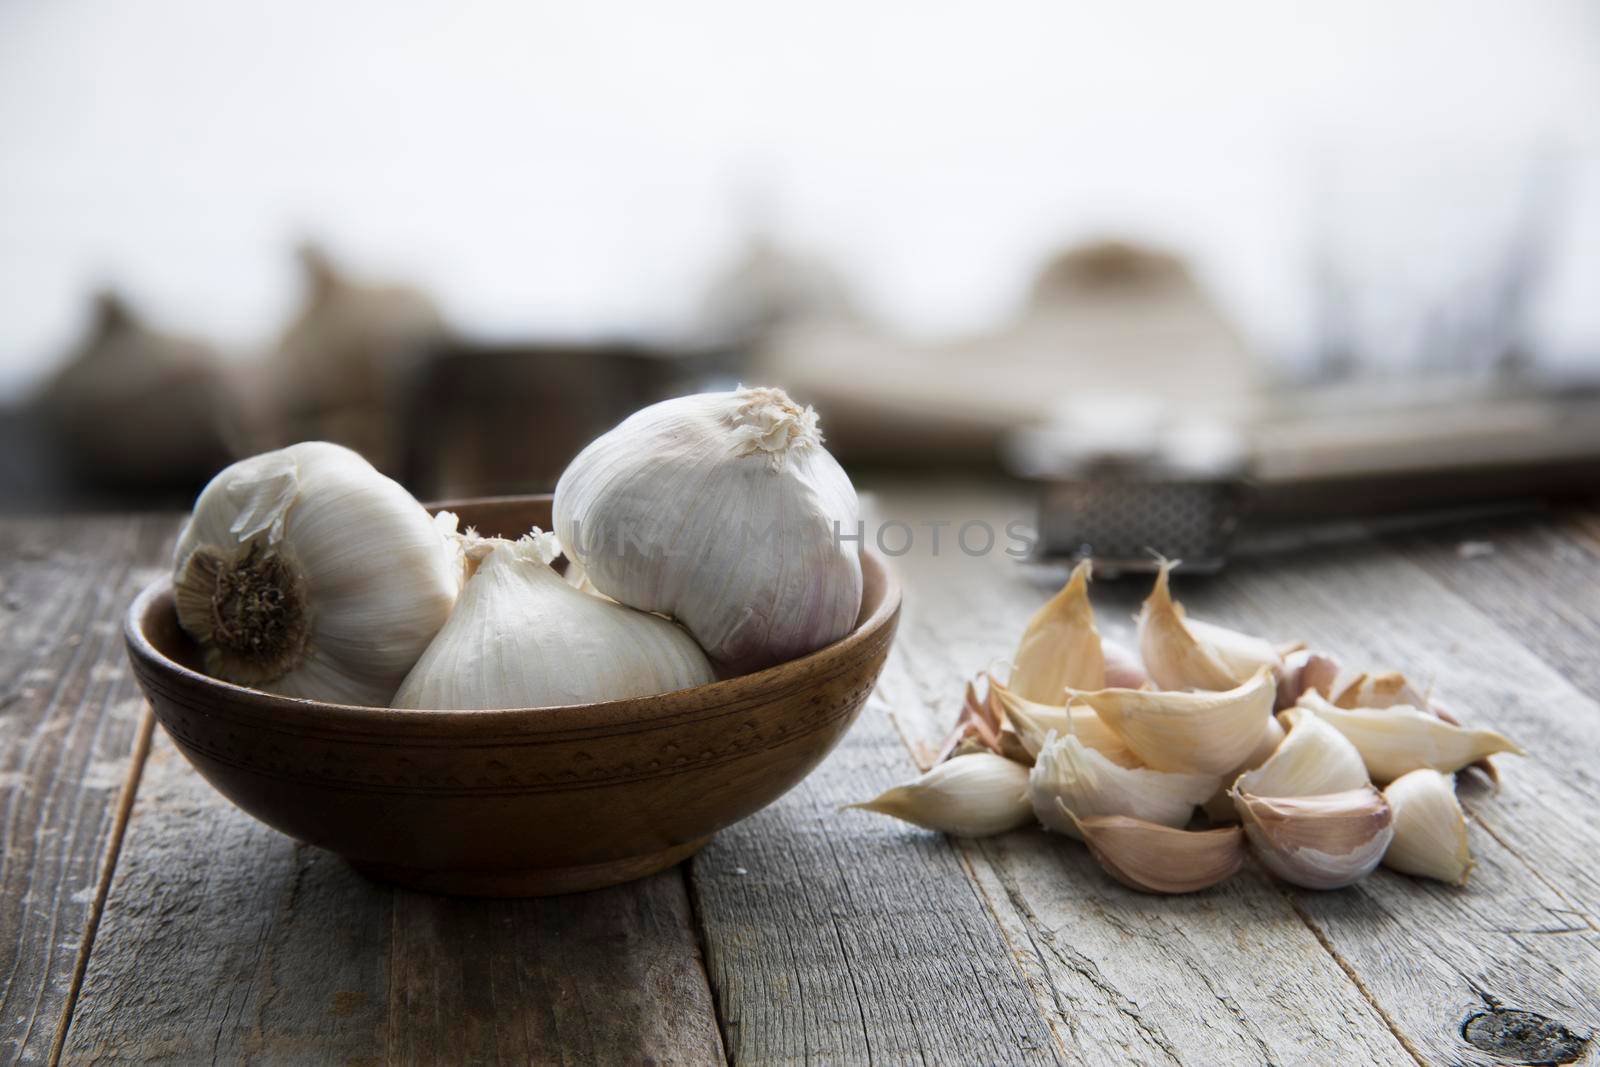 Bowl of Garlic by charlotteLake